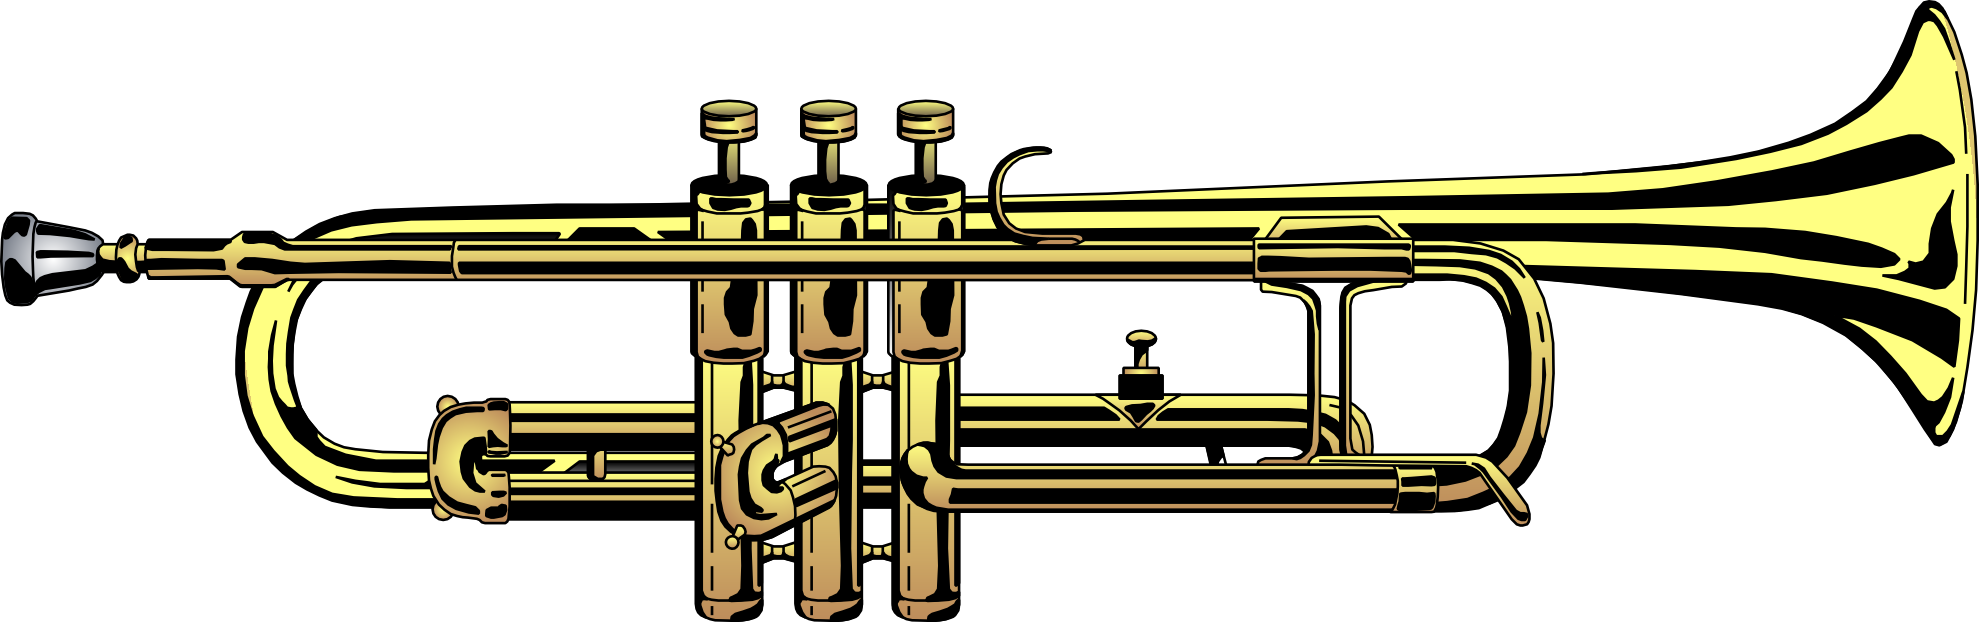 Trumpet Clip Art Pictures - Free Clipart Images